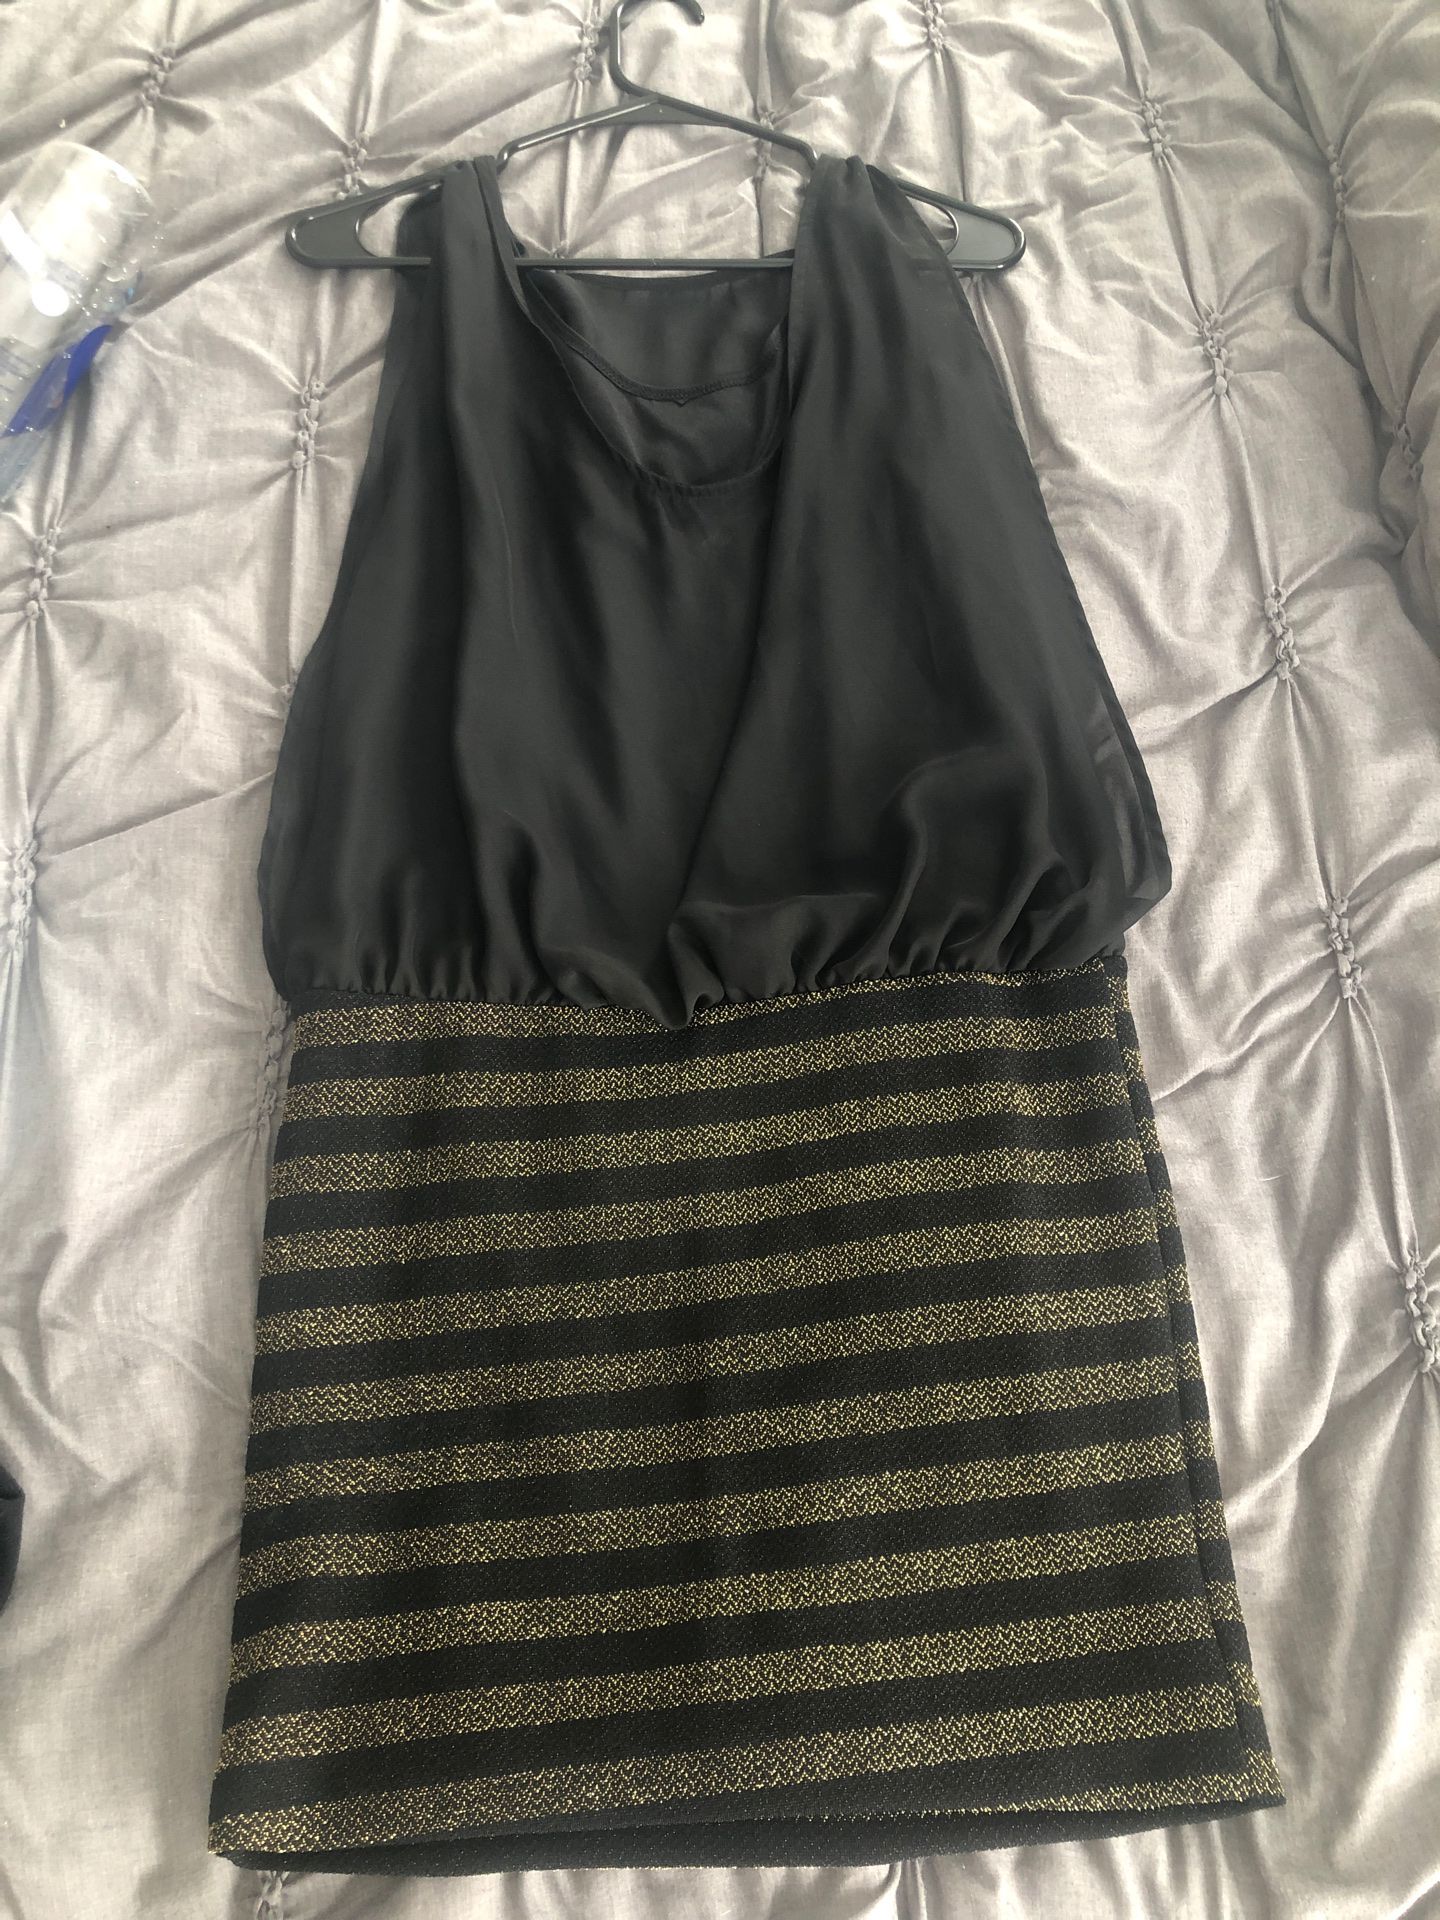 Dress (Medium)